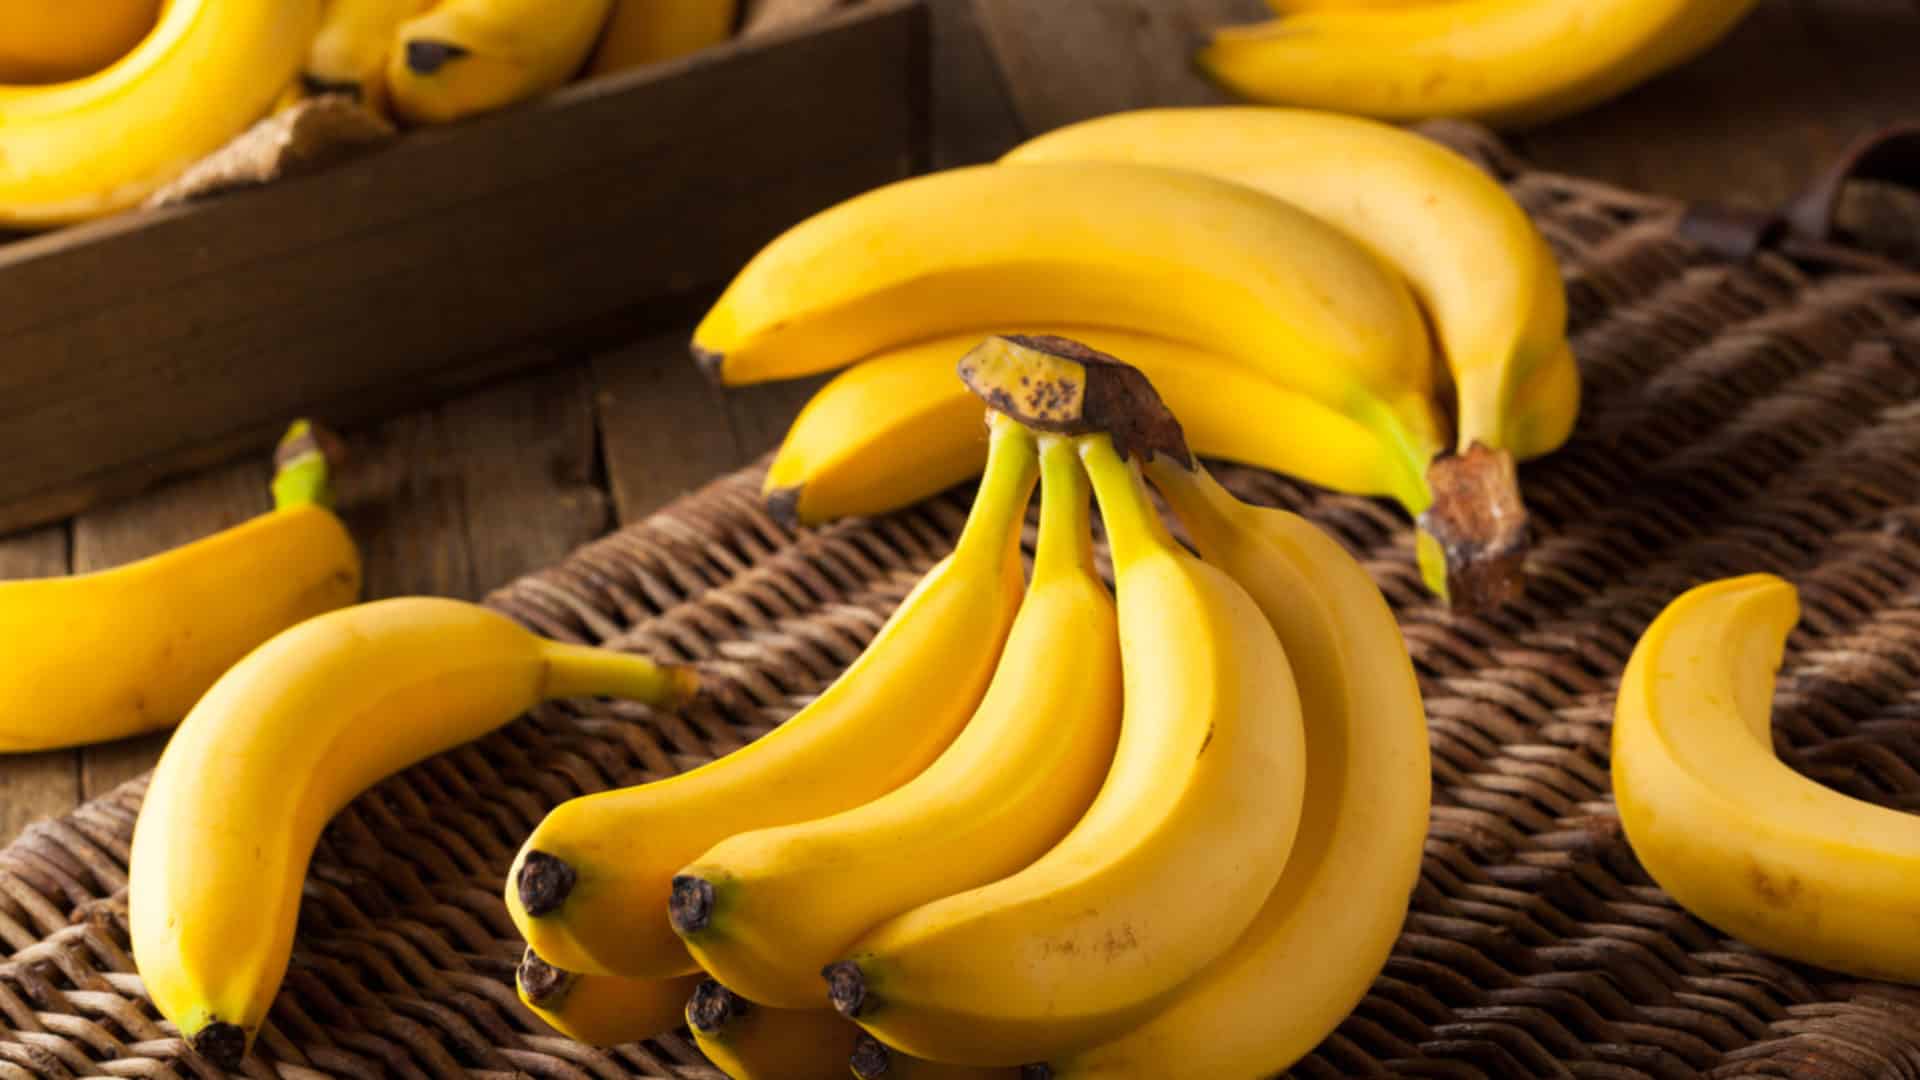 Aprenda a melhor receita de bolo de banana de todas (a mais deliciosa)